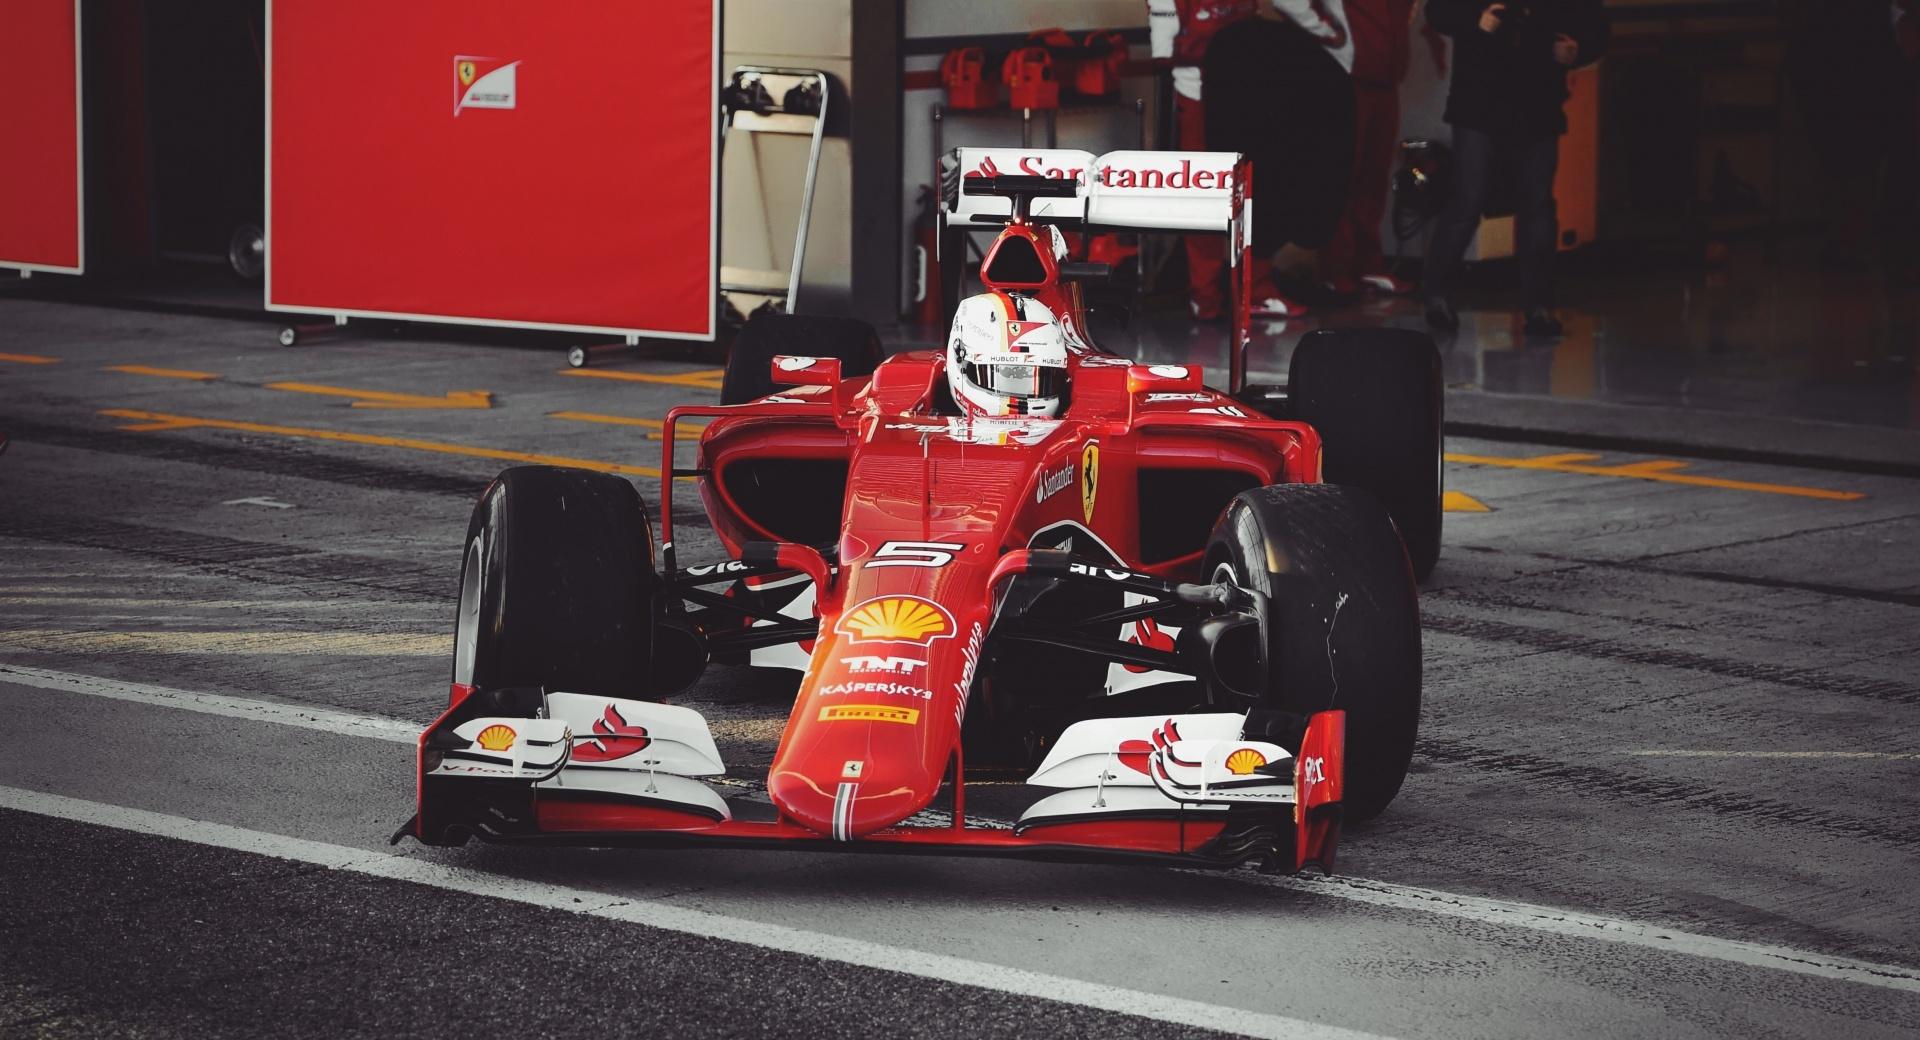 Vettel Ferrari 2015 at 640 x 1136 iPhone 5 size wallpapers HD quality